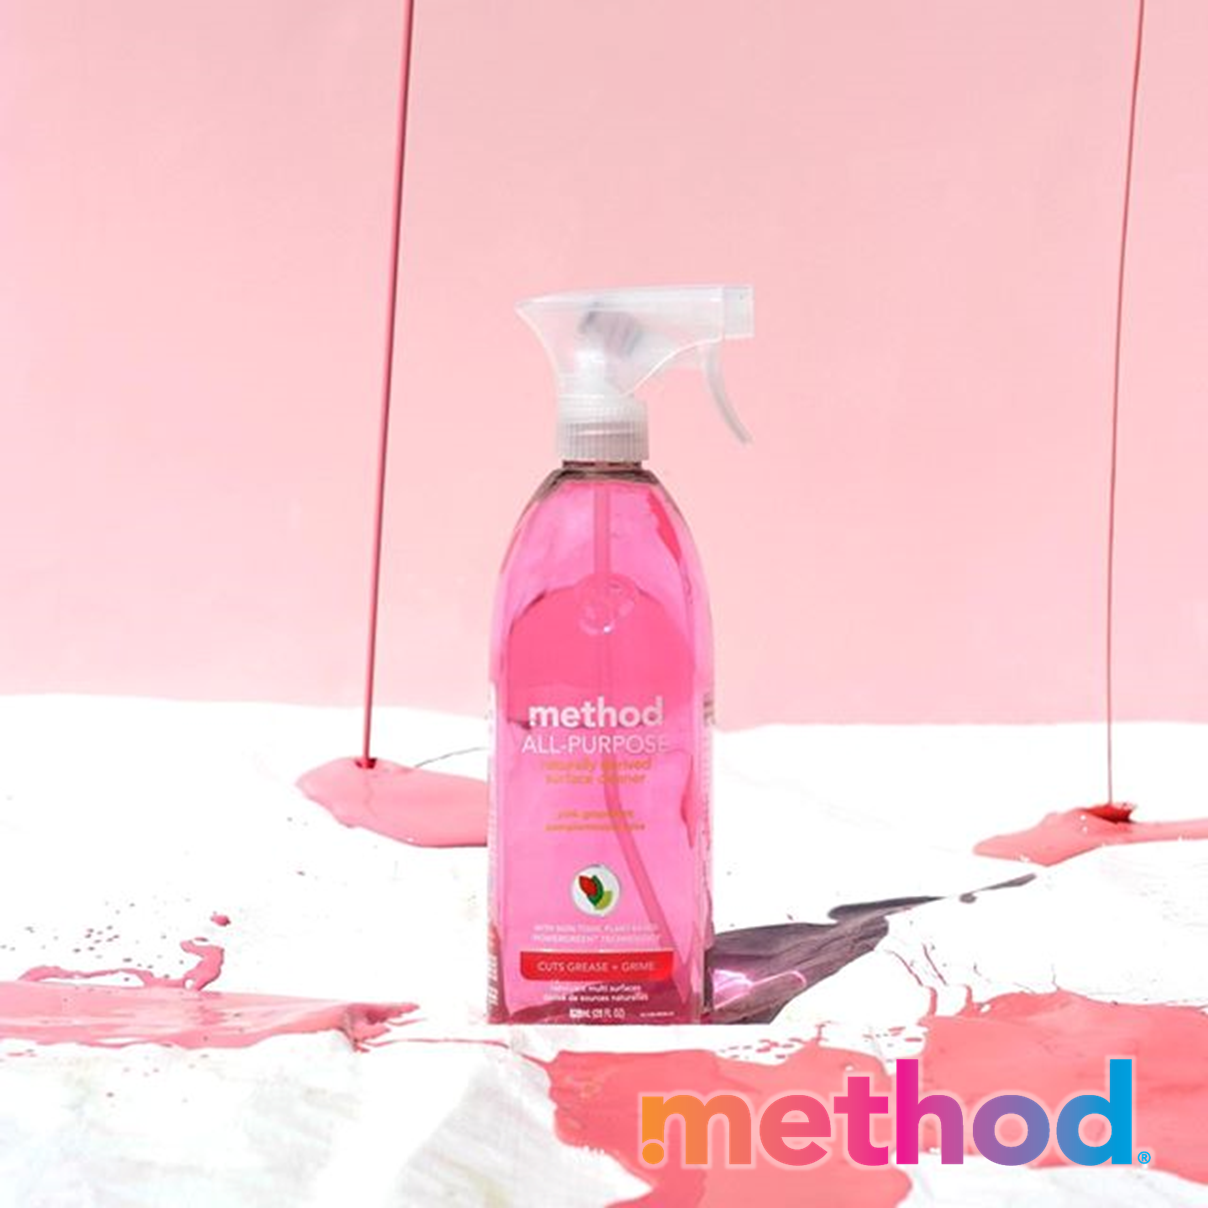 method All Purpose Cleaner Pink Grapefruit Refill 2L – methodmalaysia